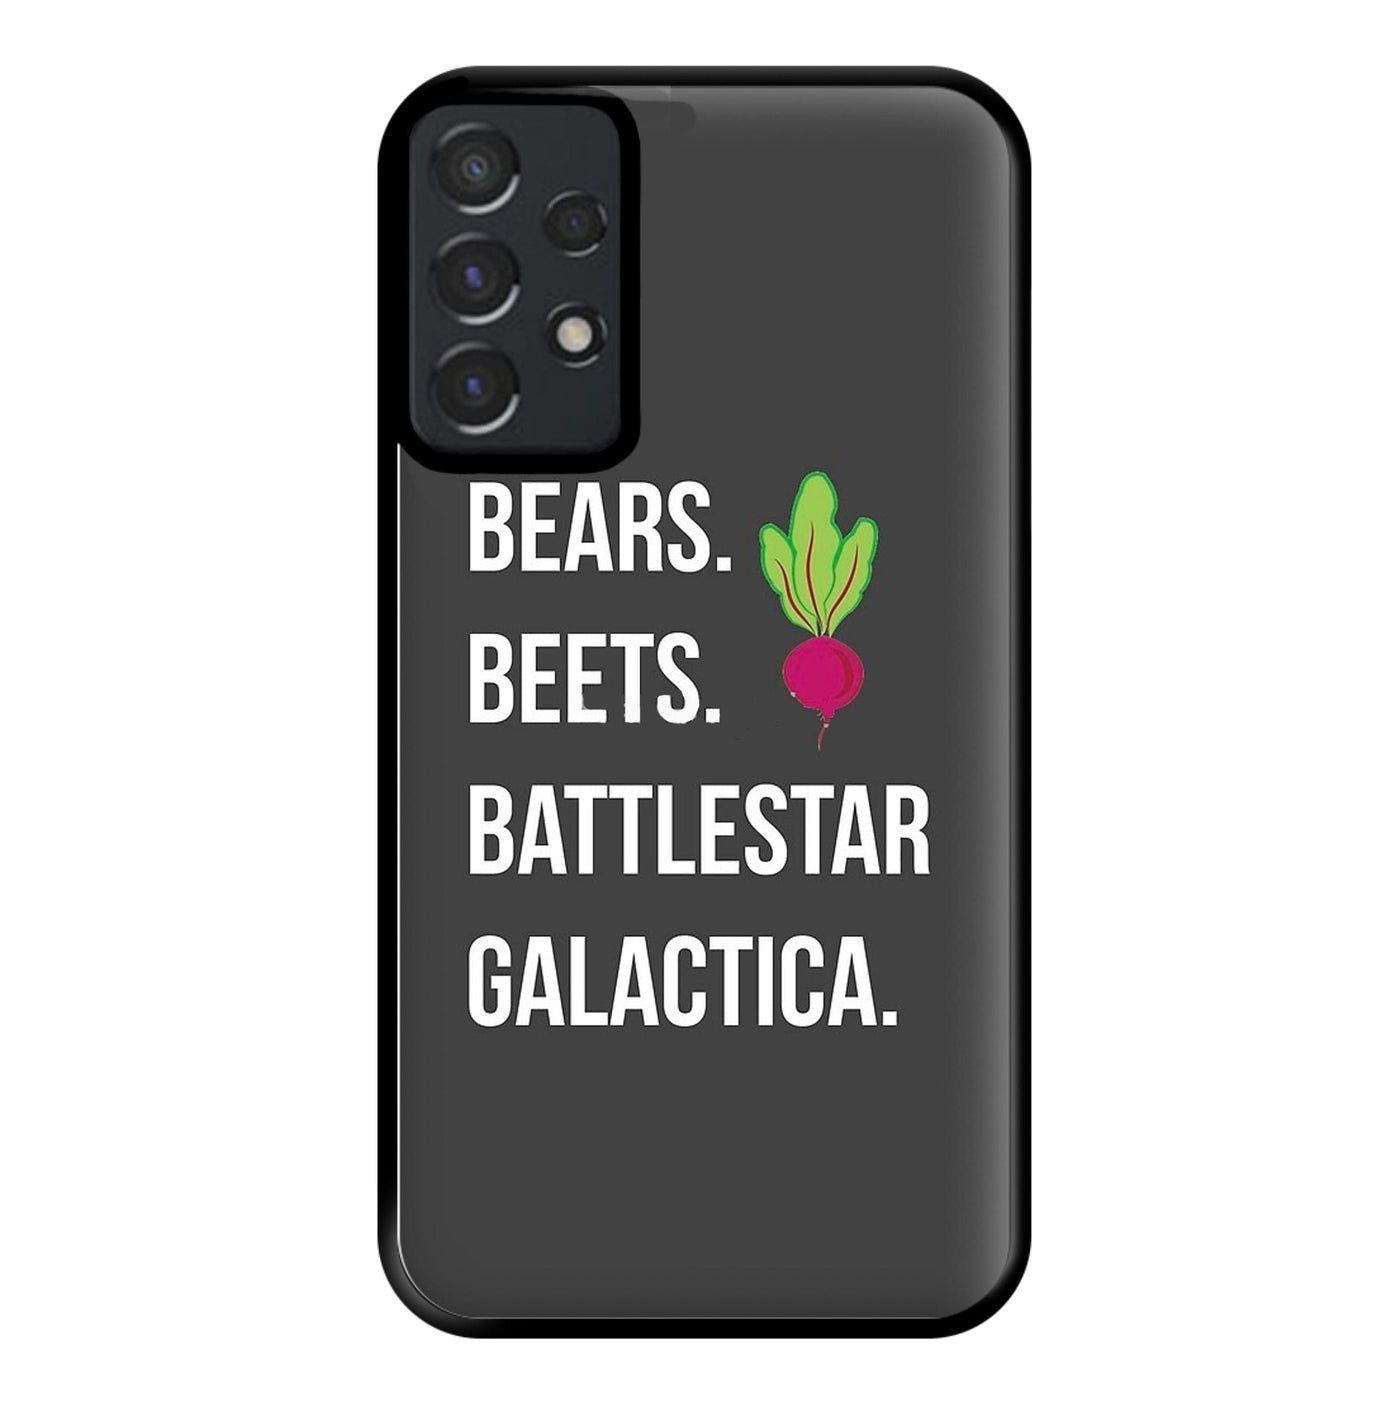 Bears. Beets. Battlestar Galactica Illustration - The Office Phone Case